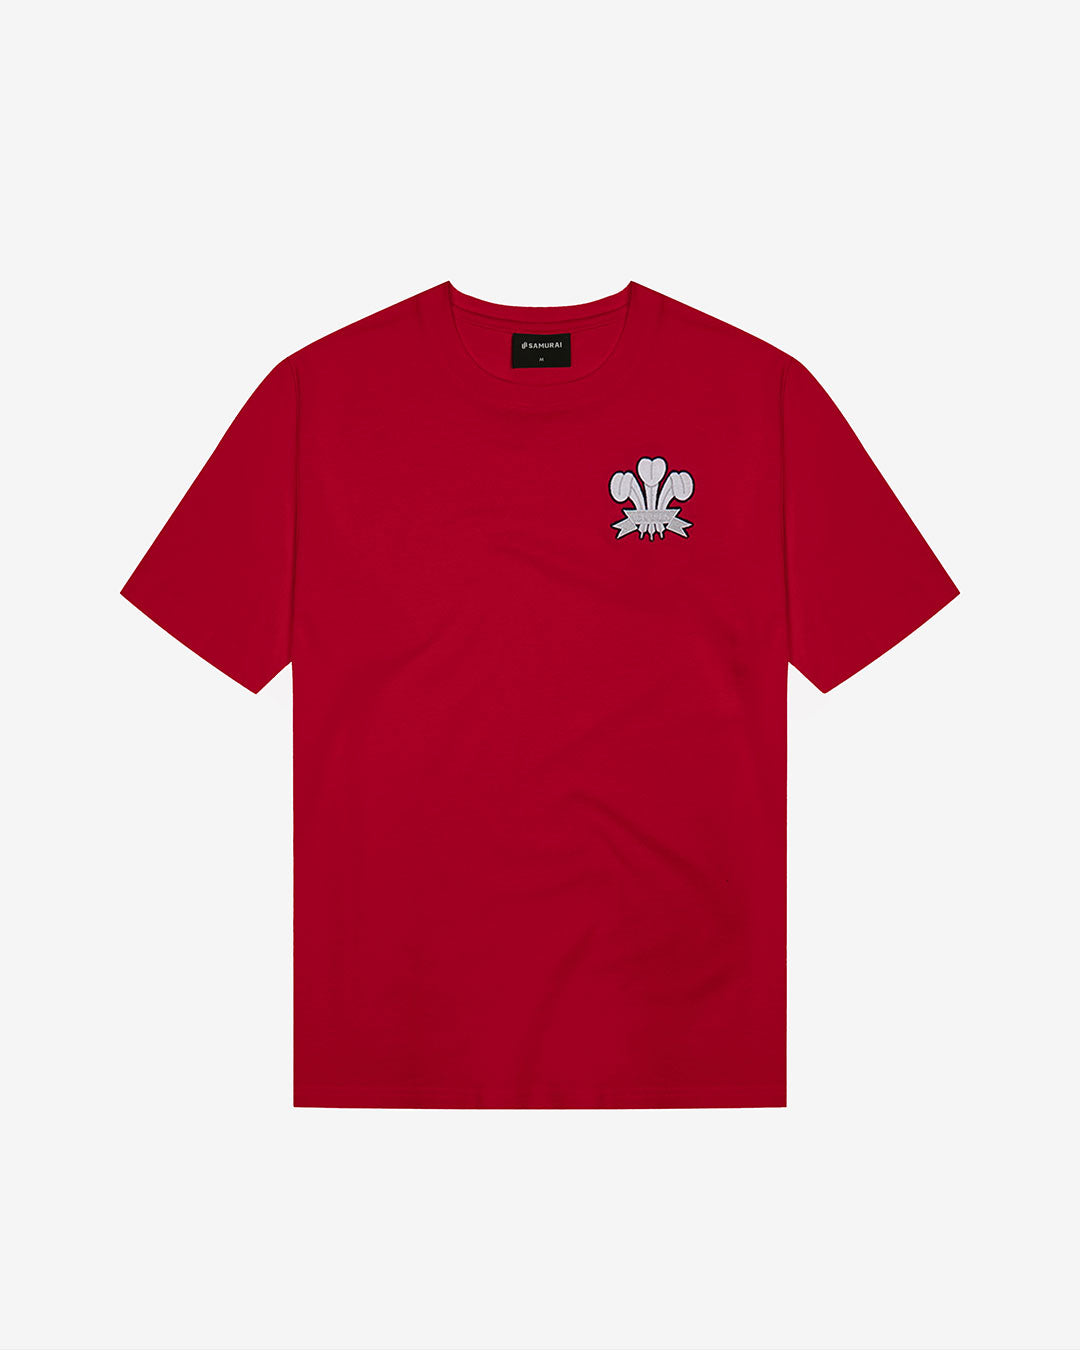 VC: GB-WLS - Women's Vintage T-Shirt - Wales